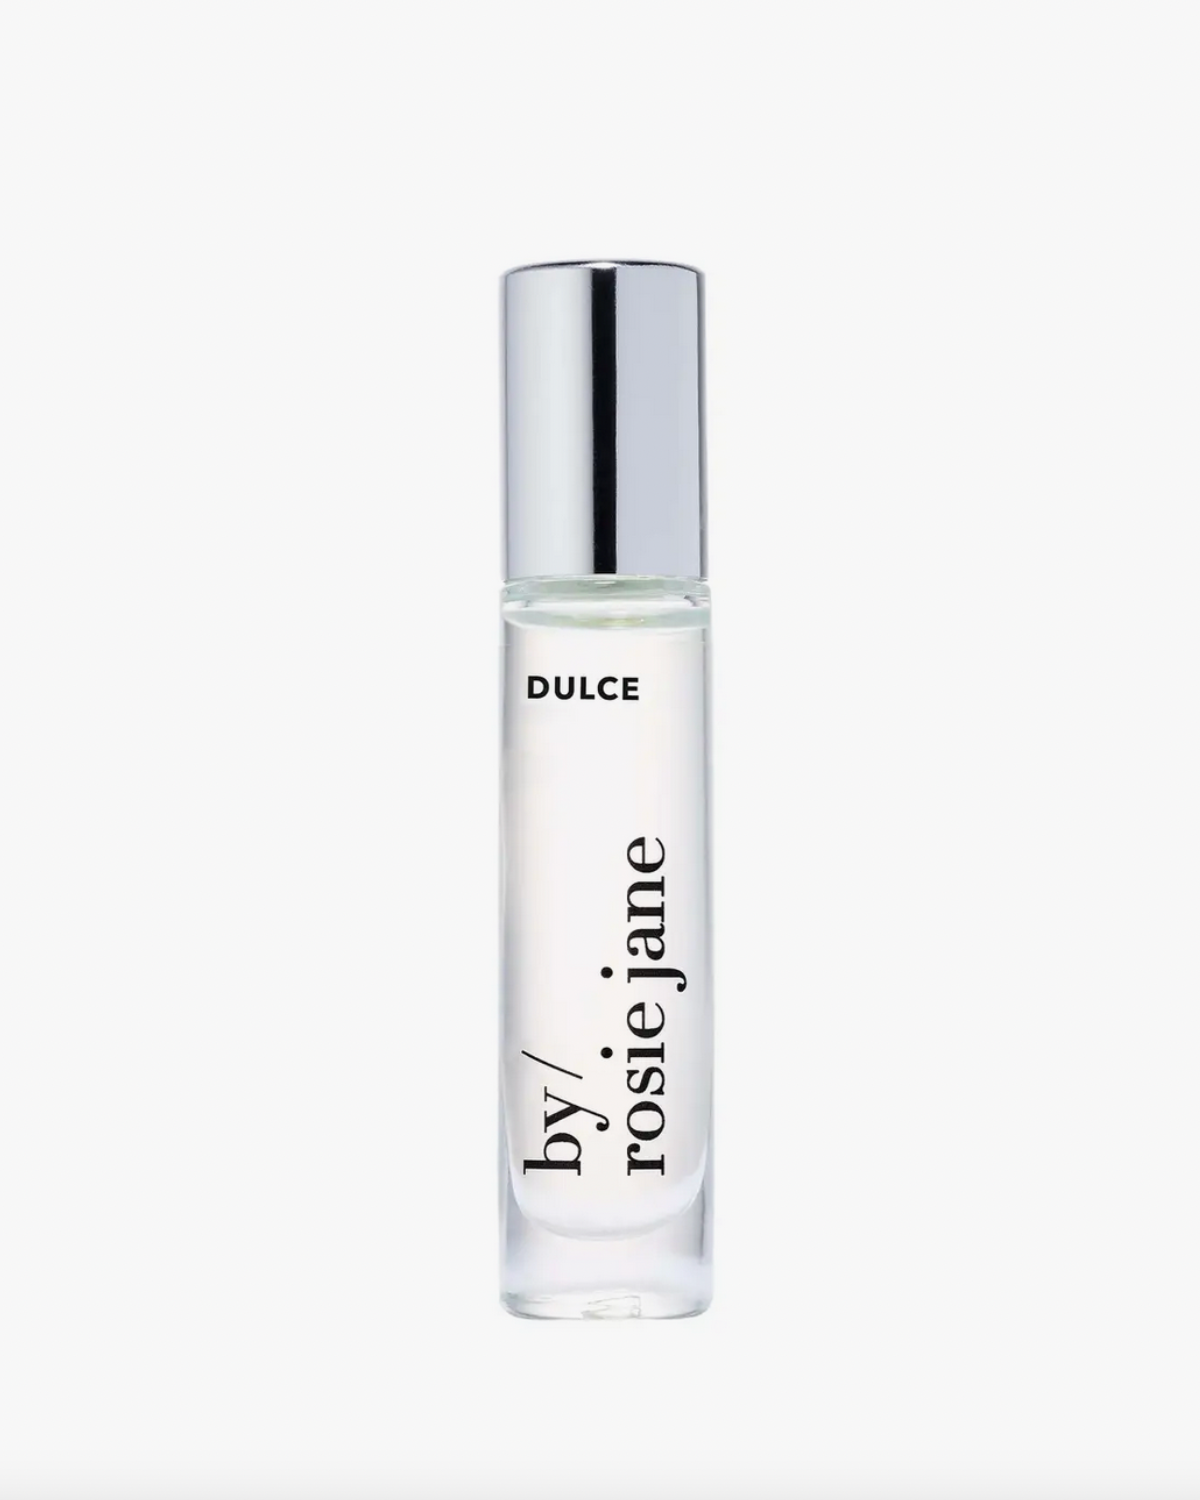 Dulce Perfume Oil by Rosie Jane